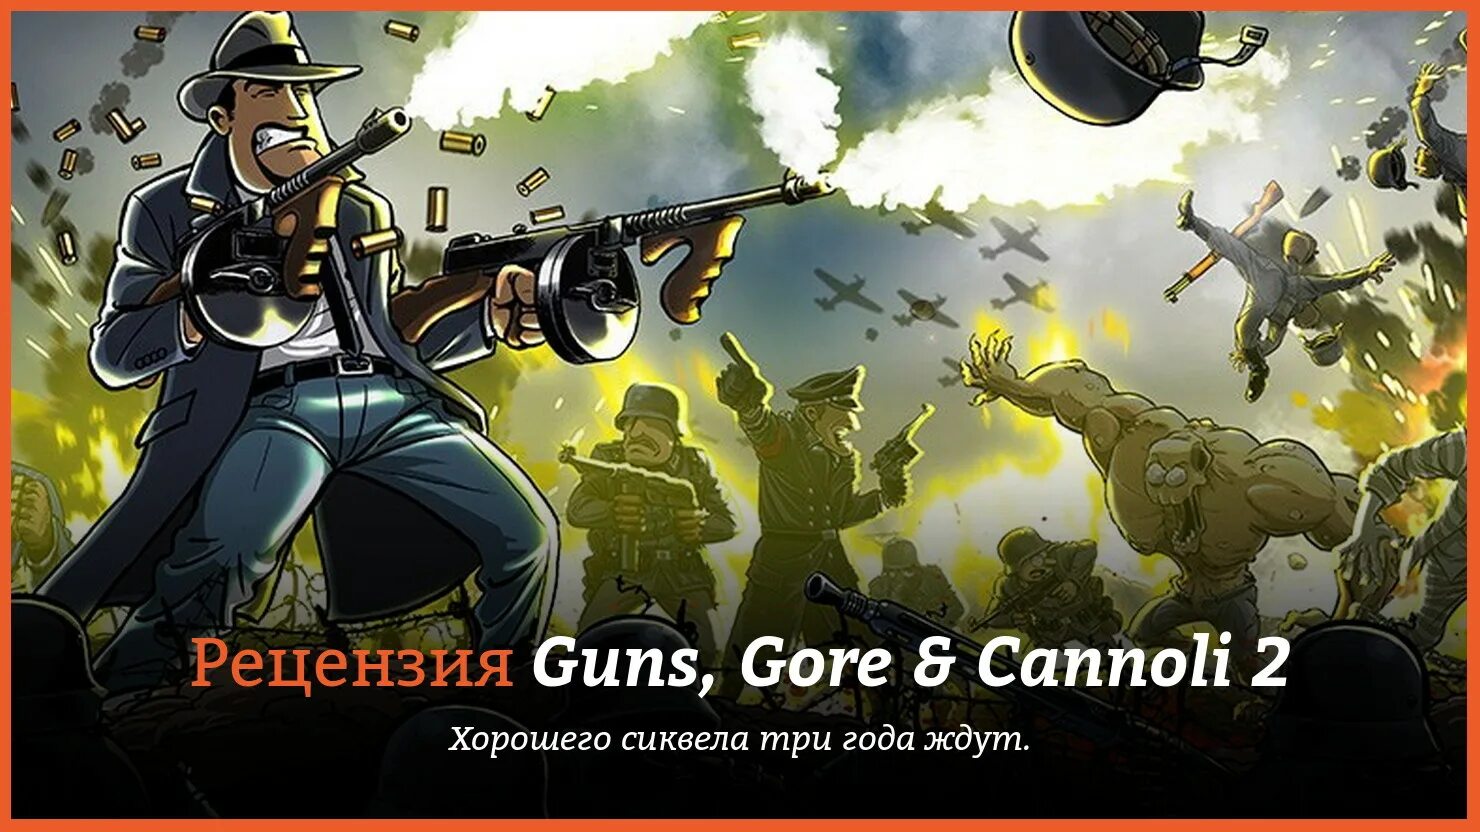 Guns core. Guns, Gore and Cannoli 2. Guns, Gore & Cannoli. Каноли 2 картинки. Guns Core Cannoli.